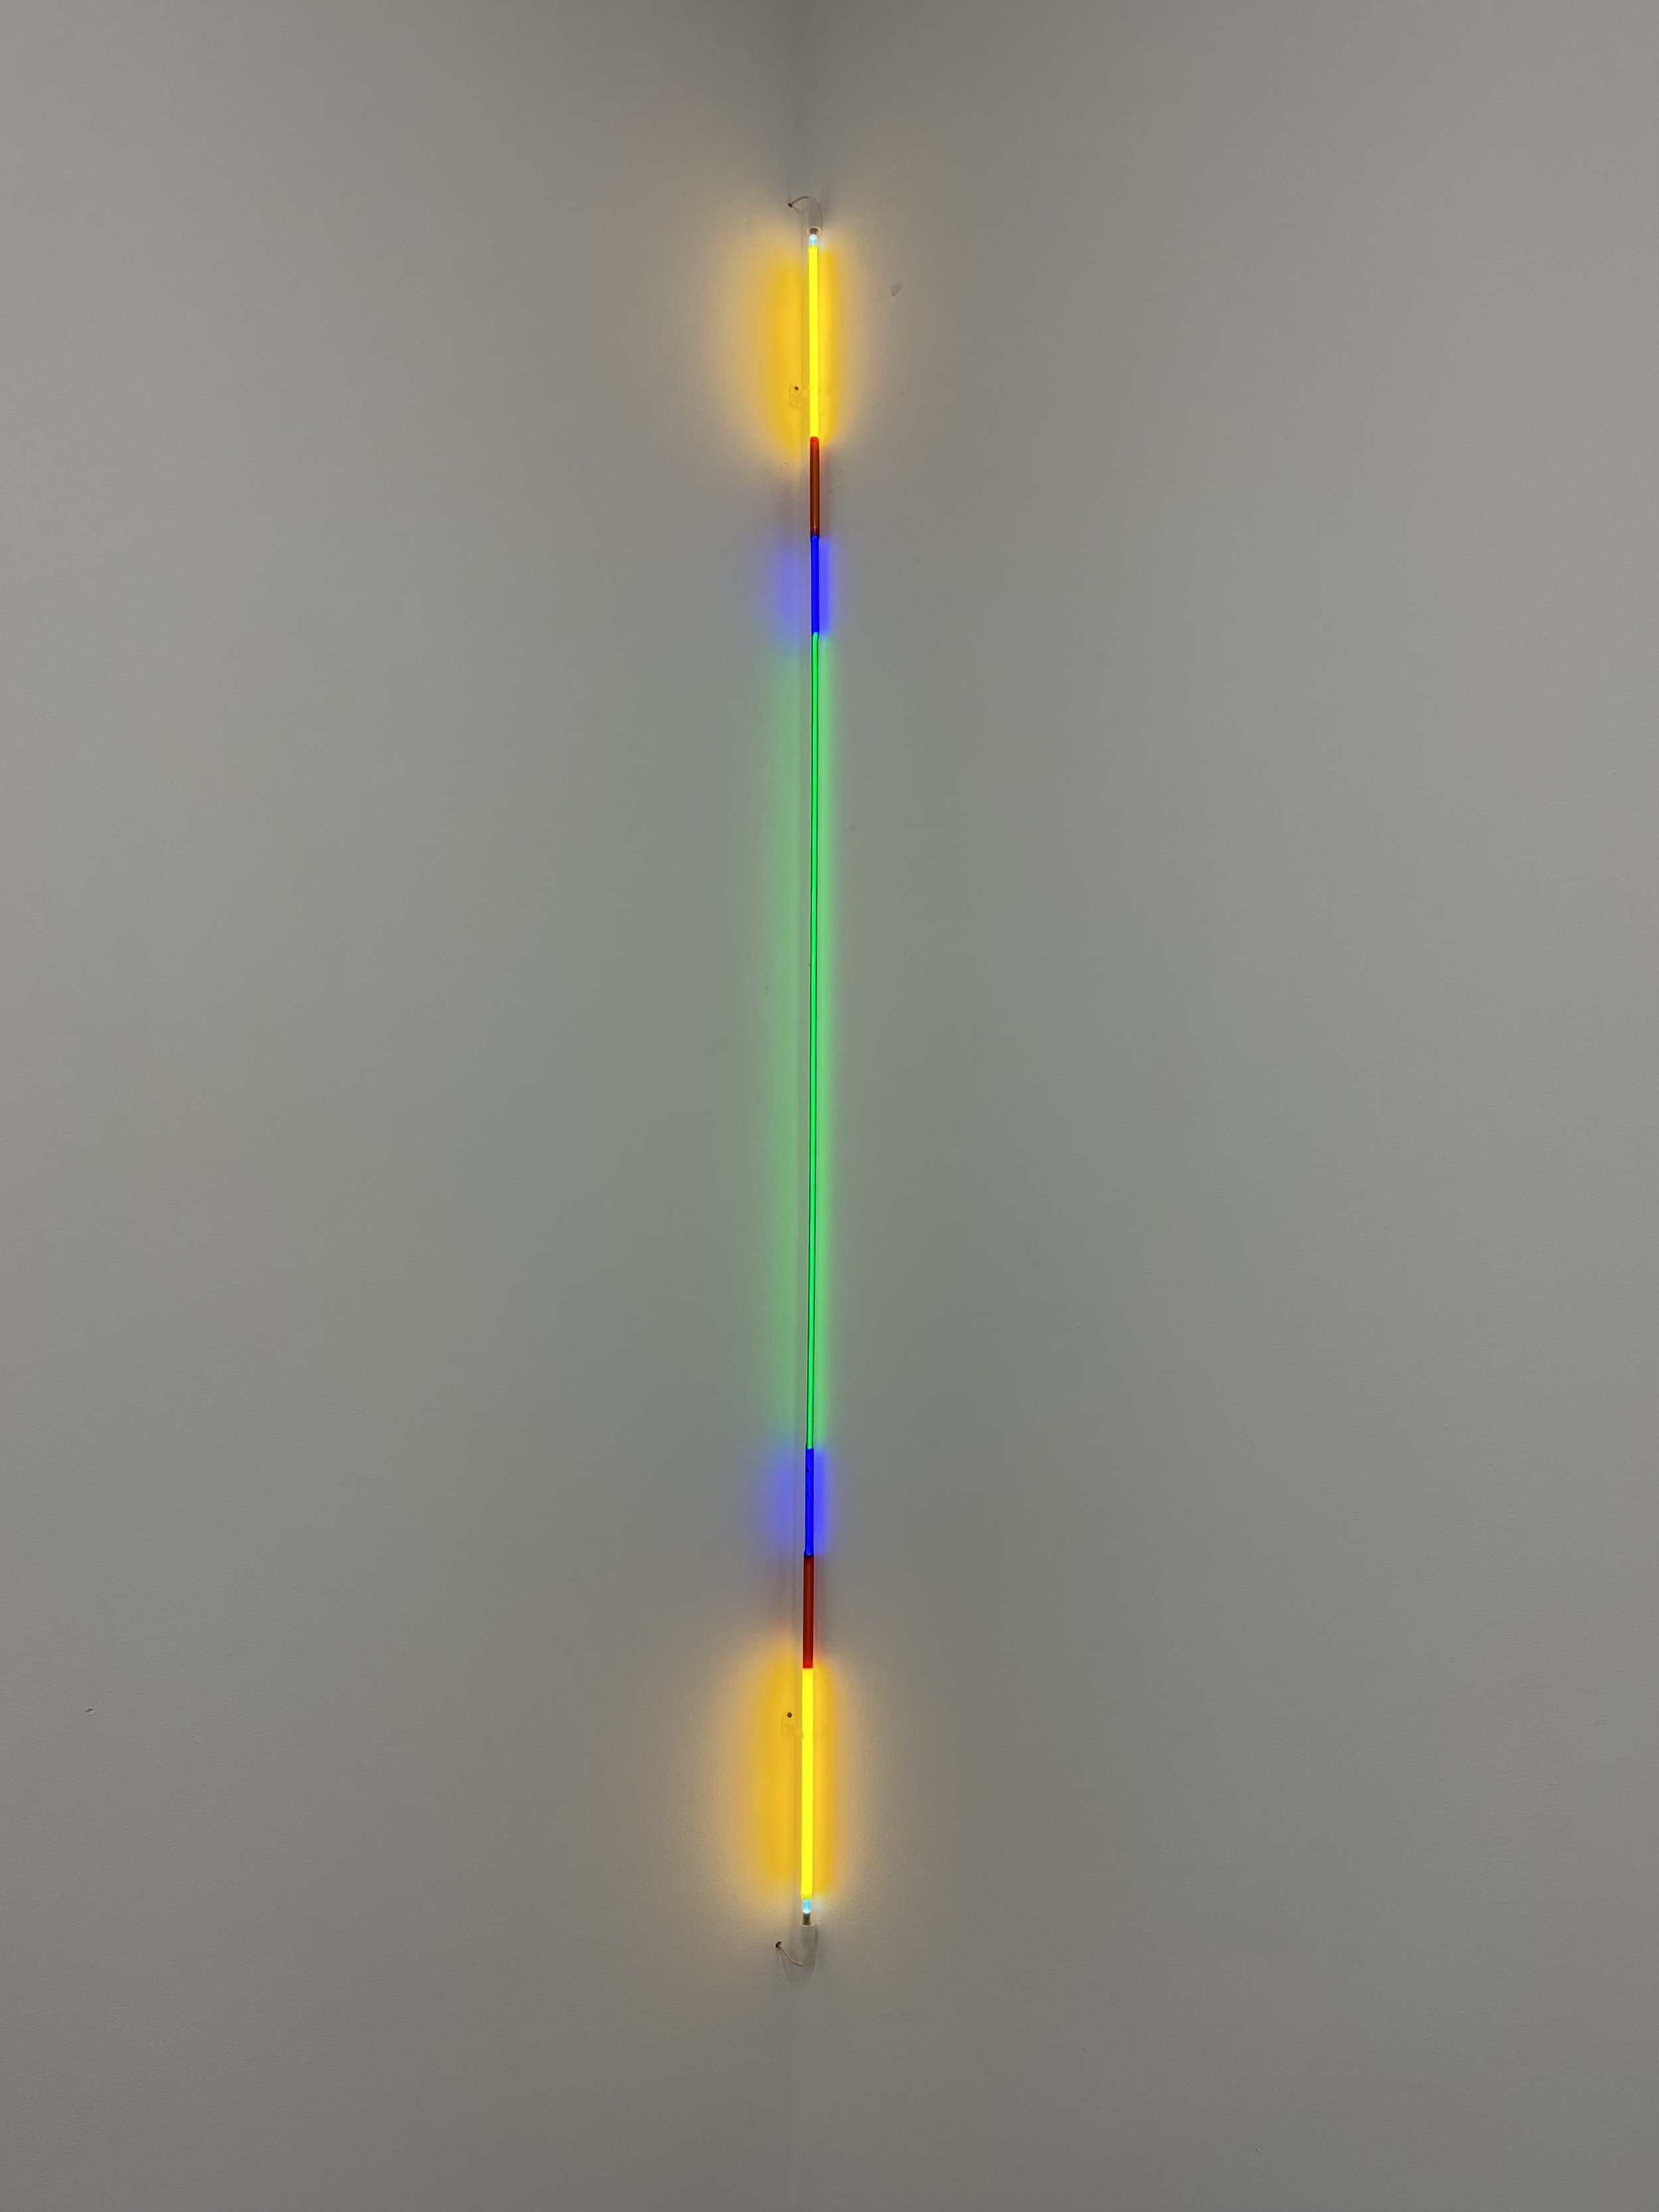  Laddie John Dill  Light Sentence  glass tubing, argon gas, wires, transformer 101 x&nbsp; 3/4 in&nbsp; (256.5 x 1.9 cm) 